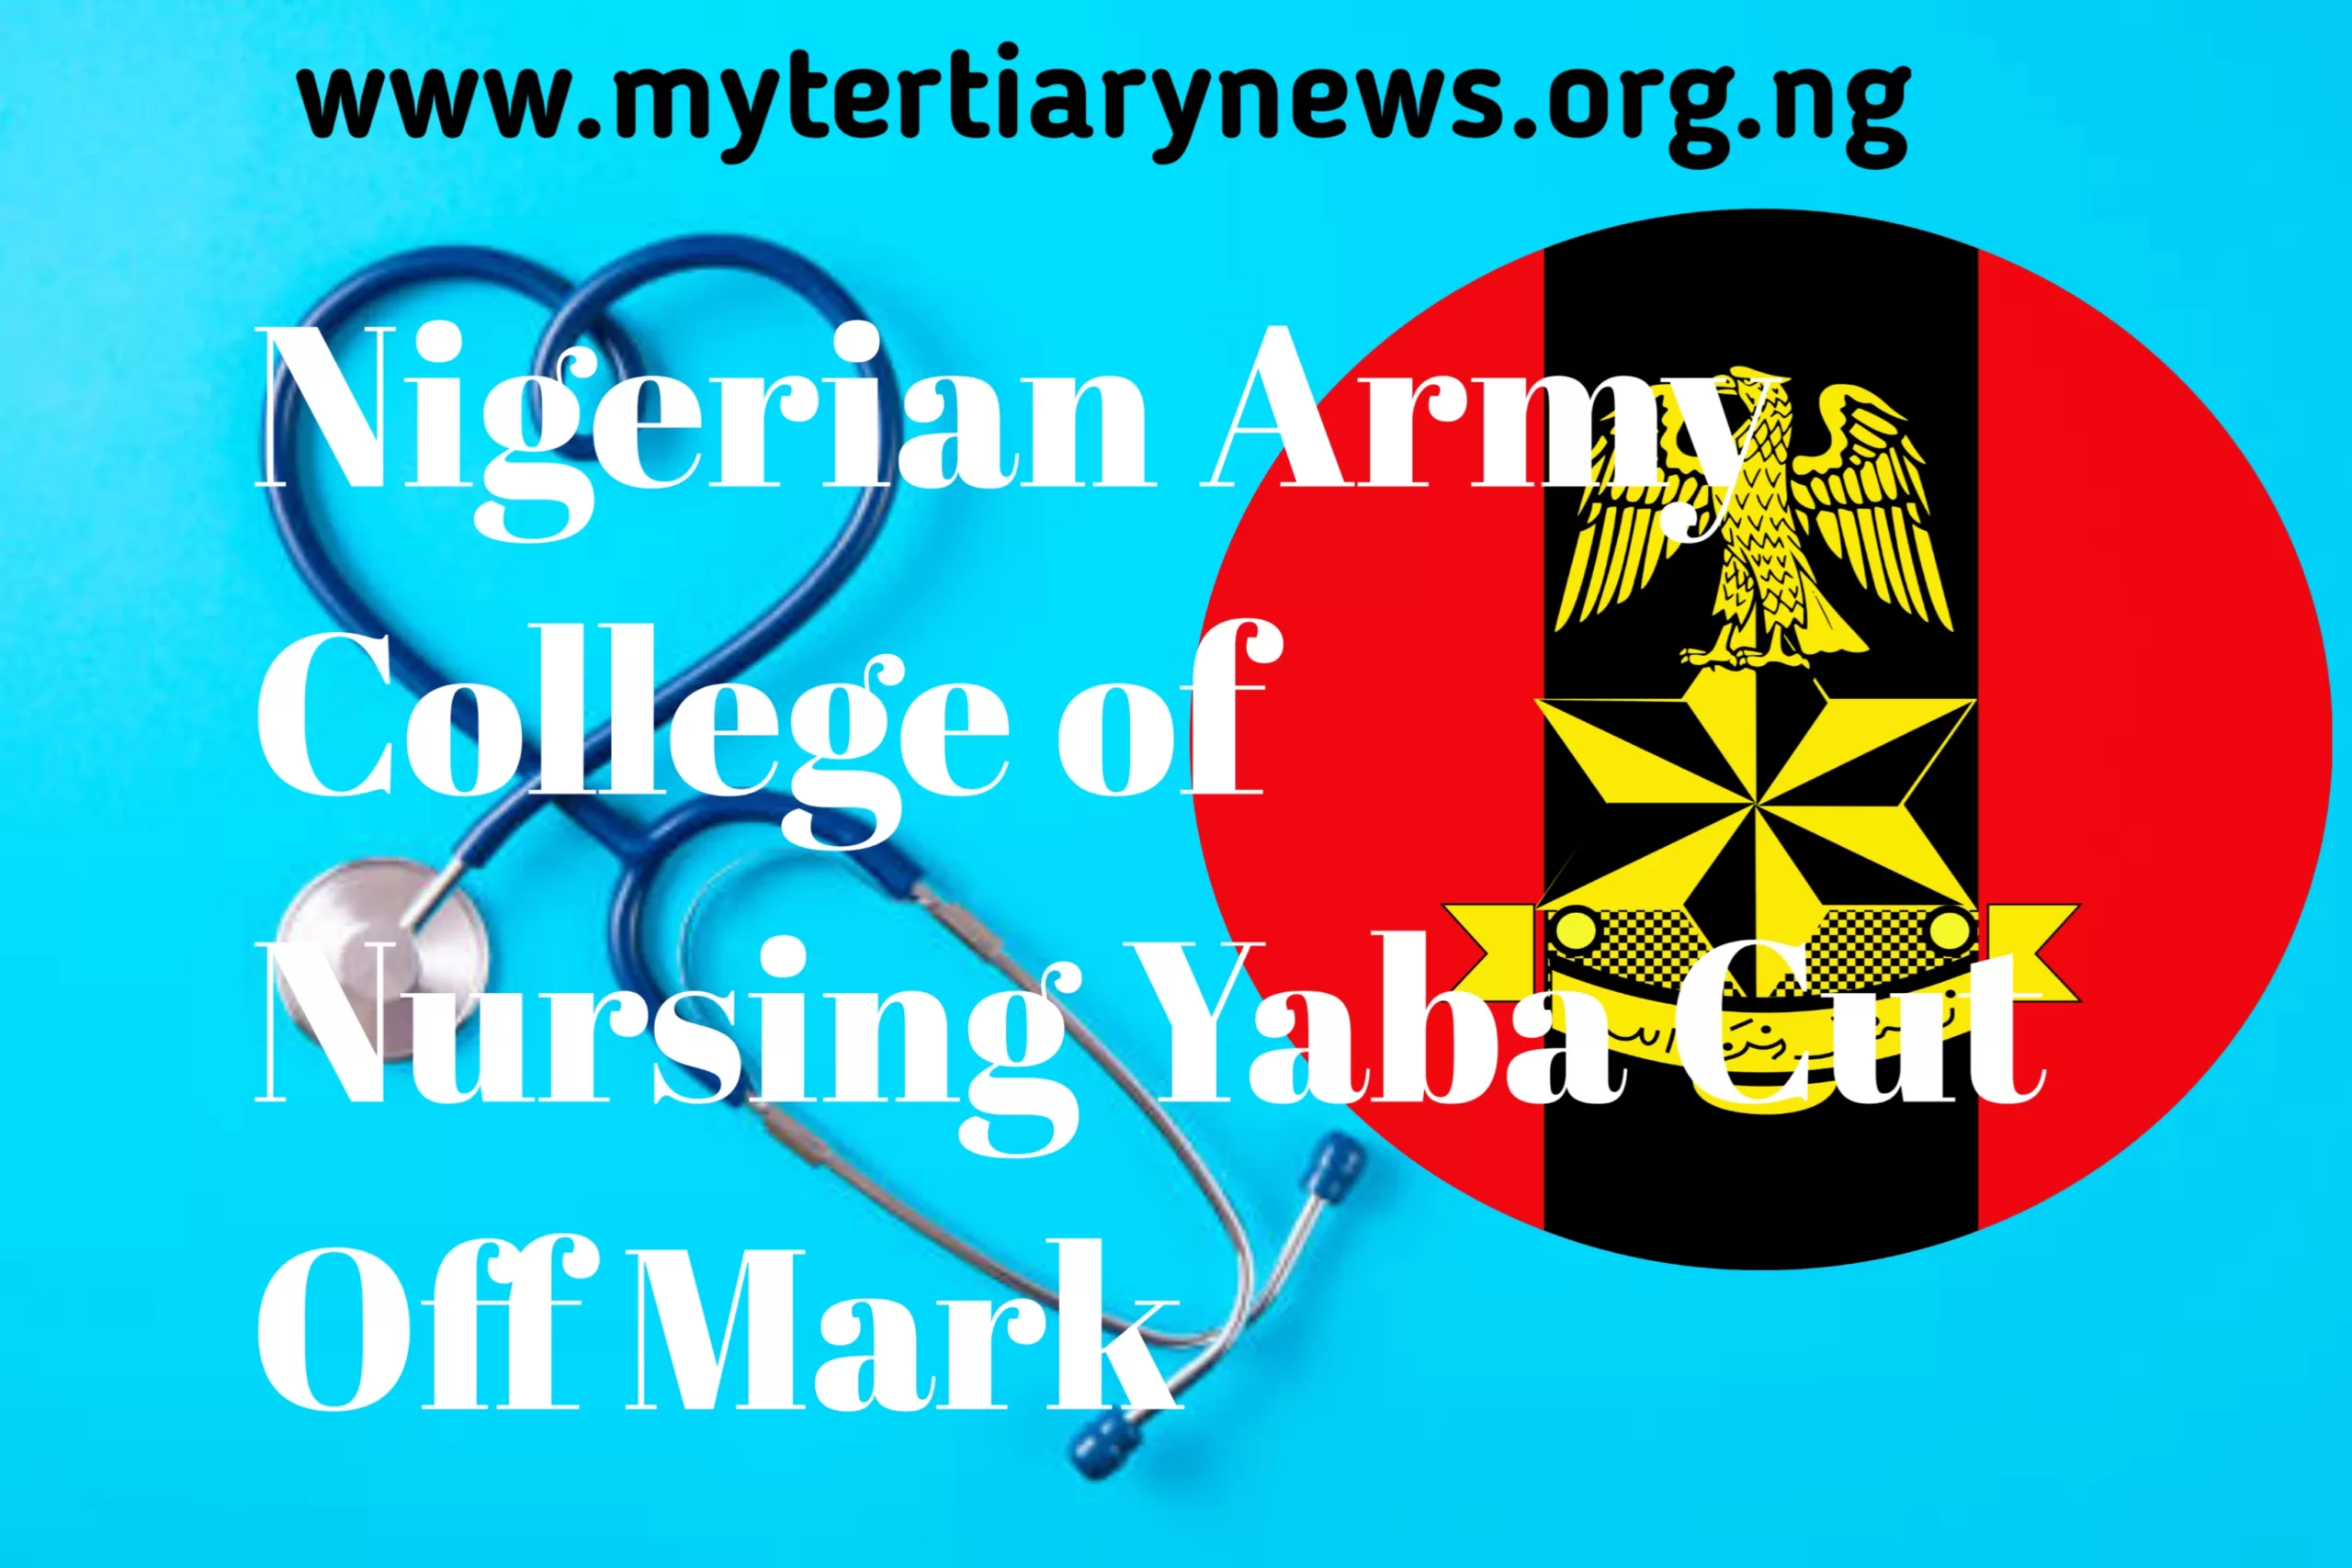 Nigerian Army College of Nursing Image || Nigerian Army College of Nursing Yaba Cut Off Mark